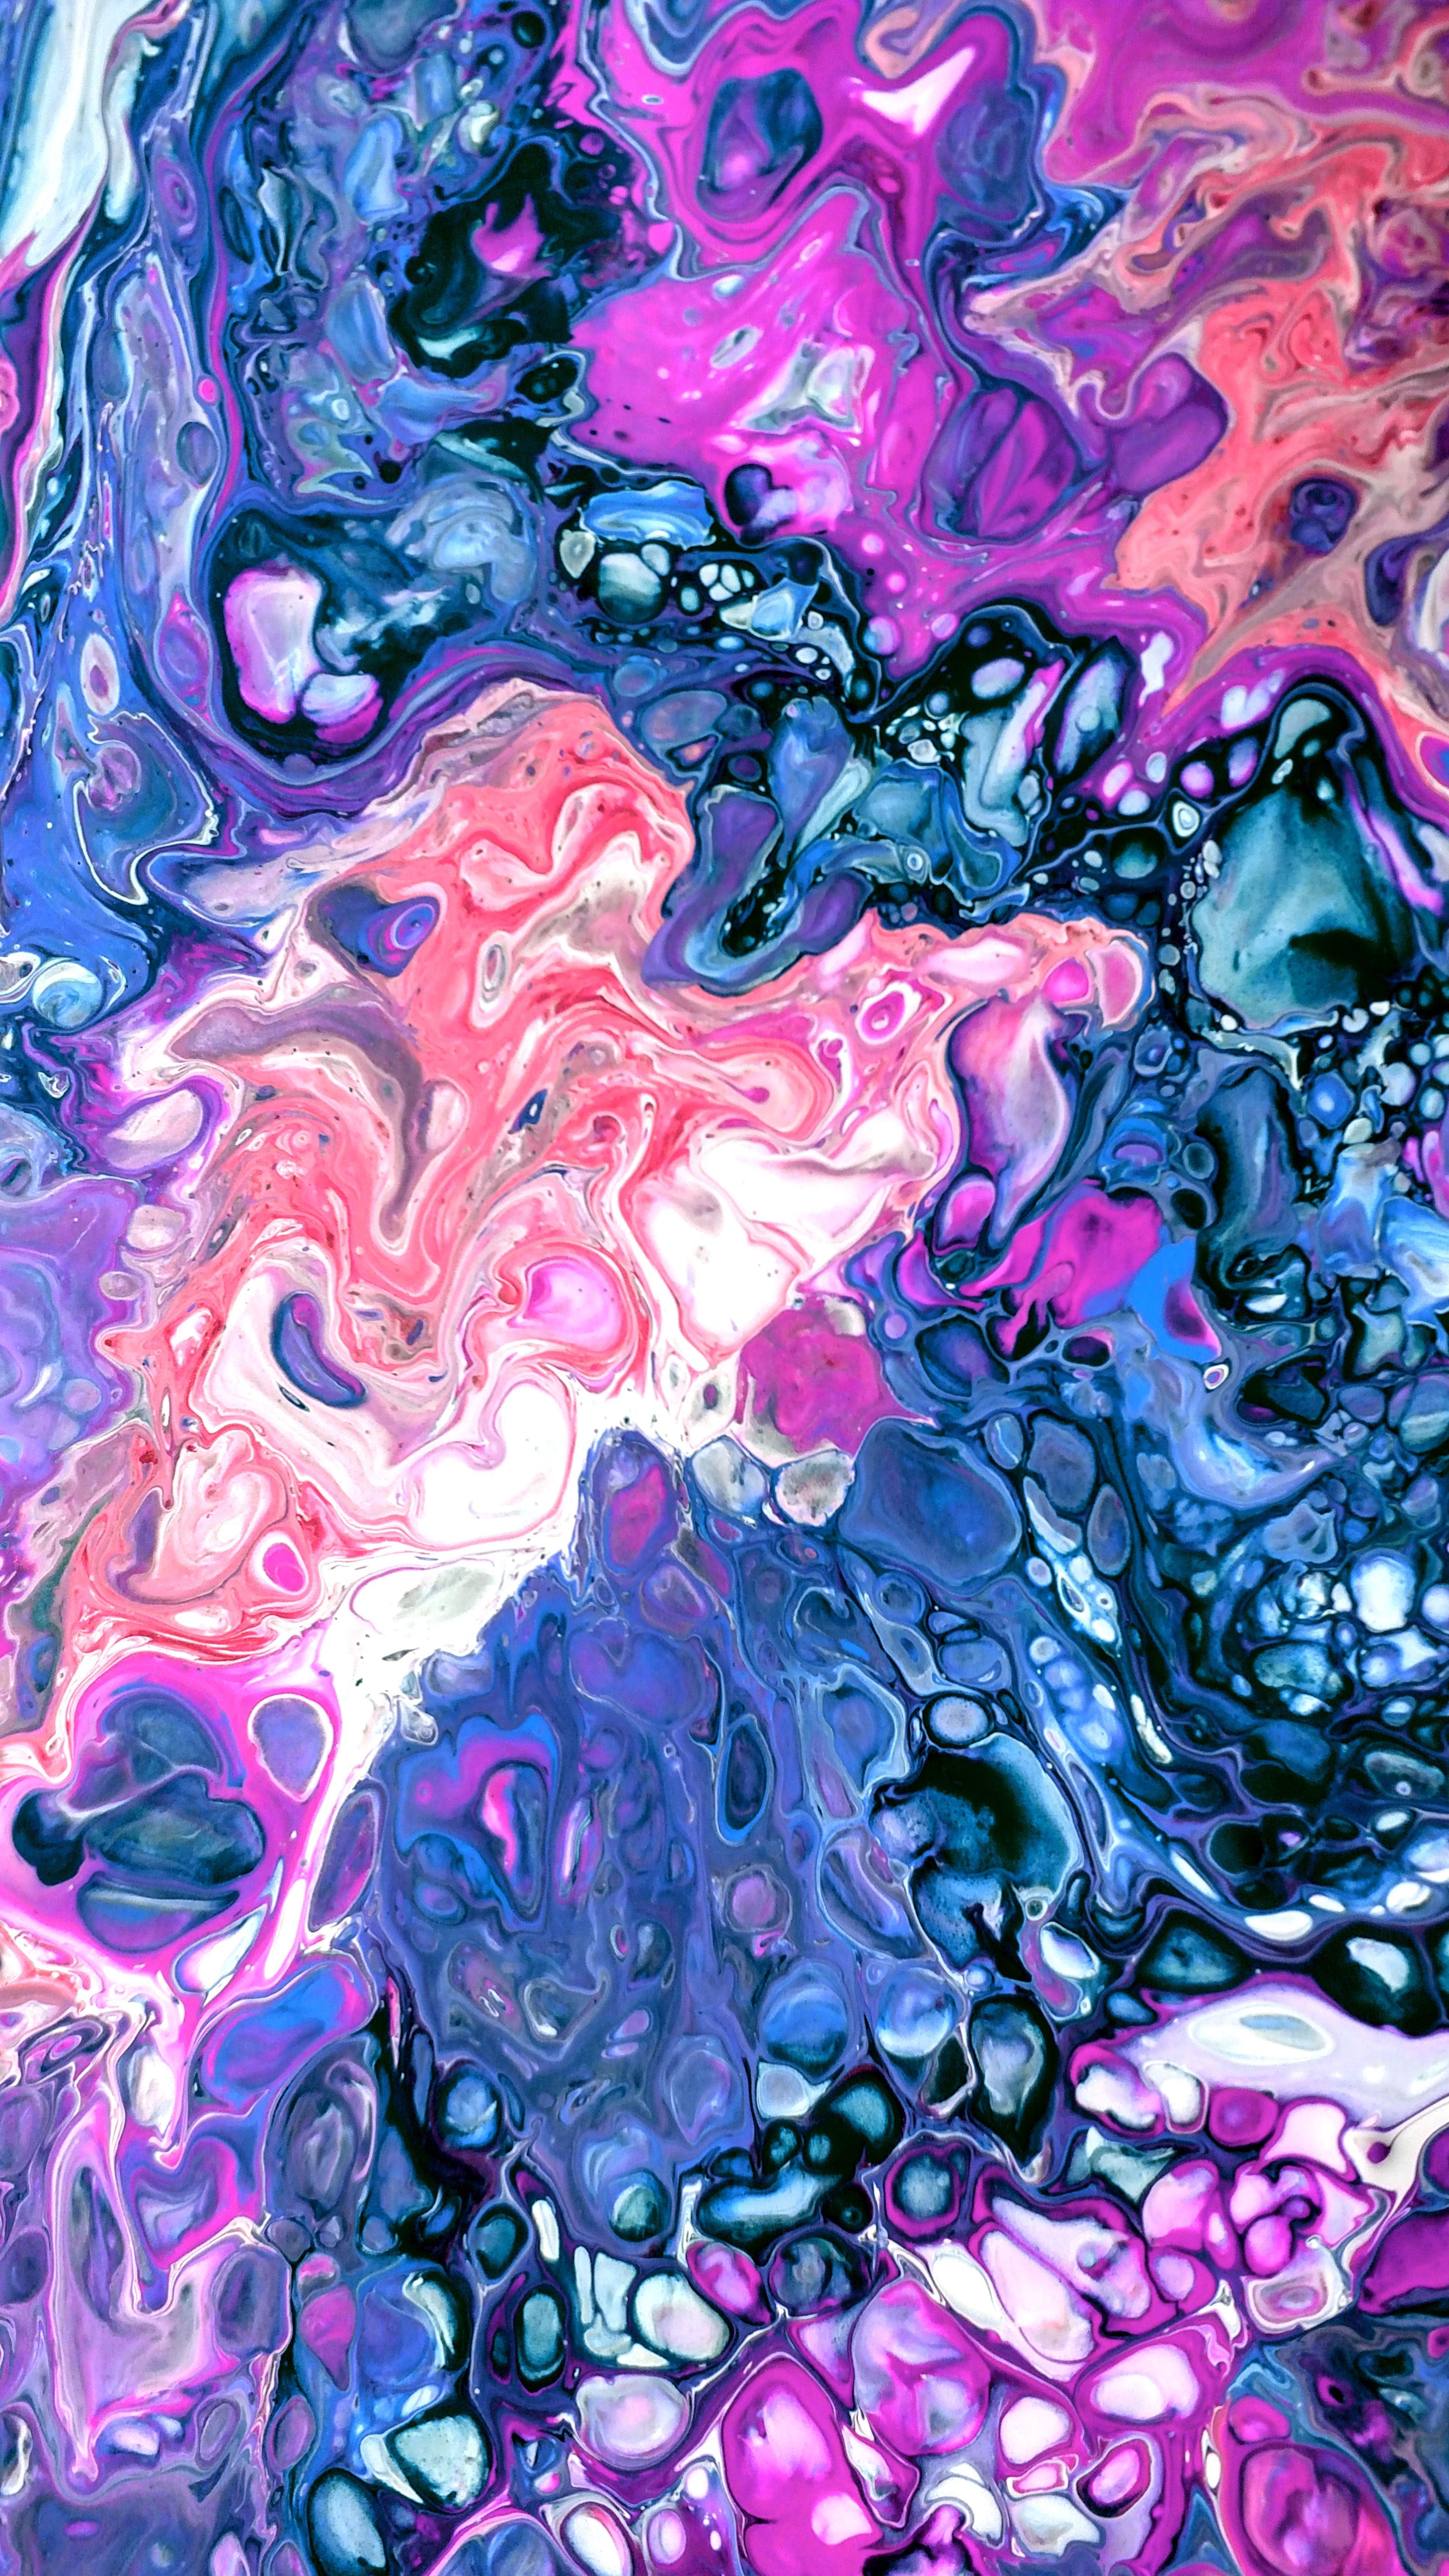 Abstract,4k,Colorful,Liquid Flow,Digital Art